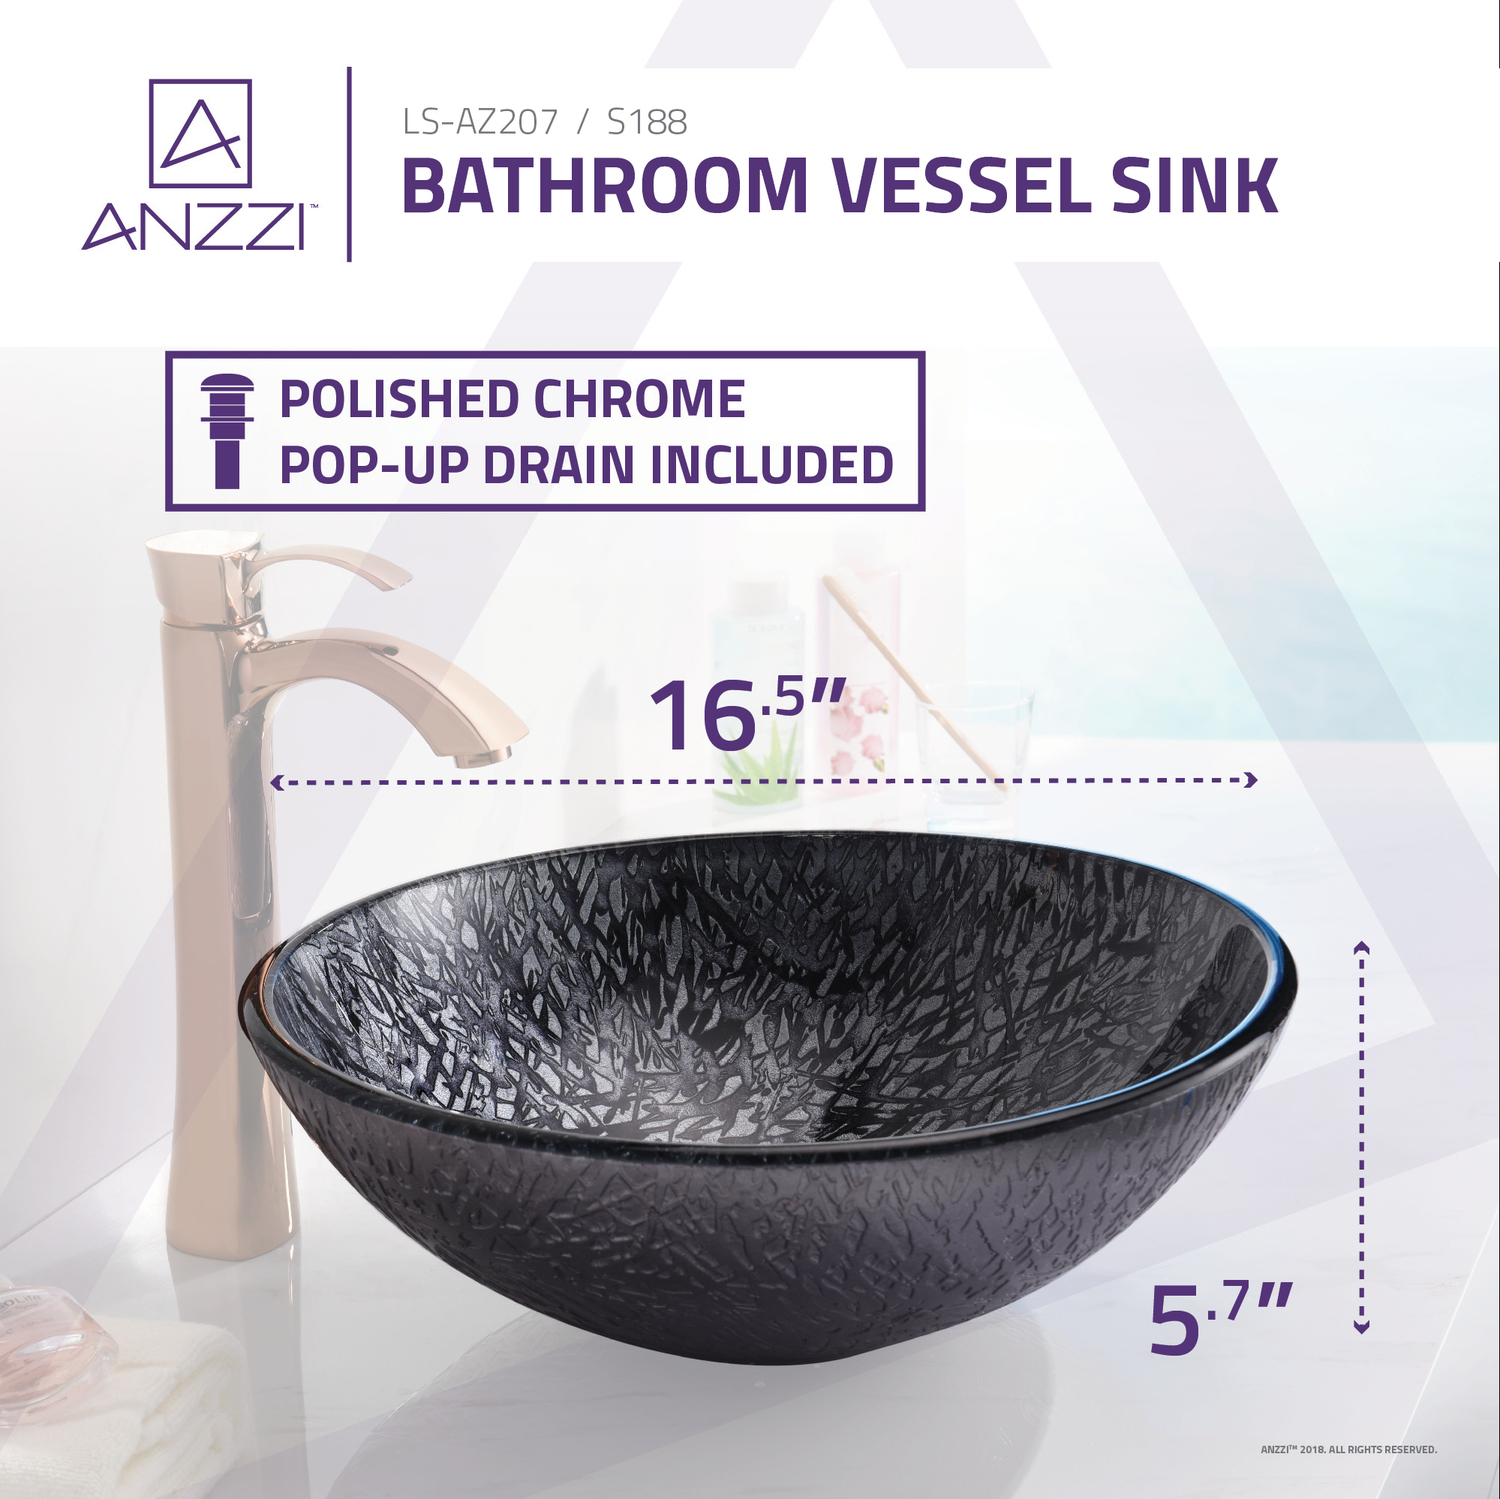 waterfall sink Anzzi BATHROOM - Sinks - Vessel - Tempered Glass Gray